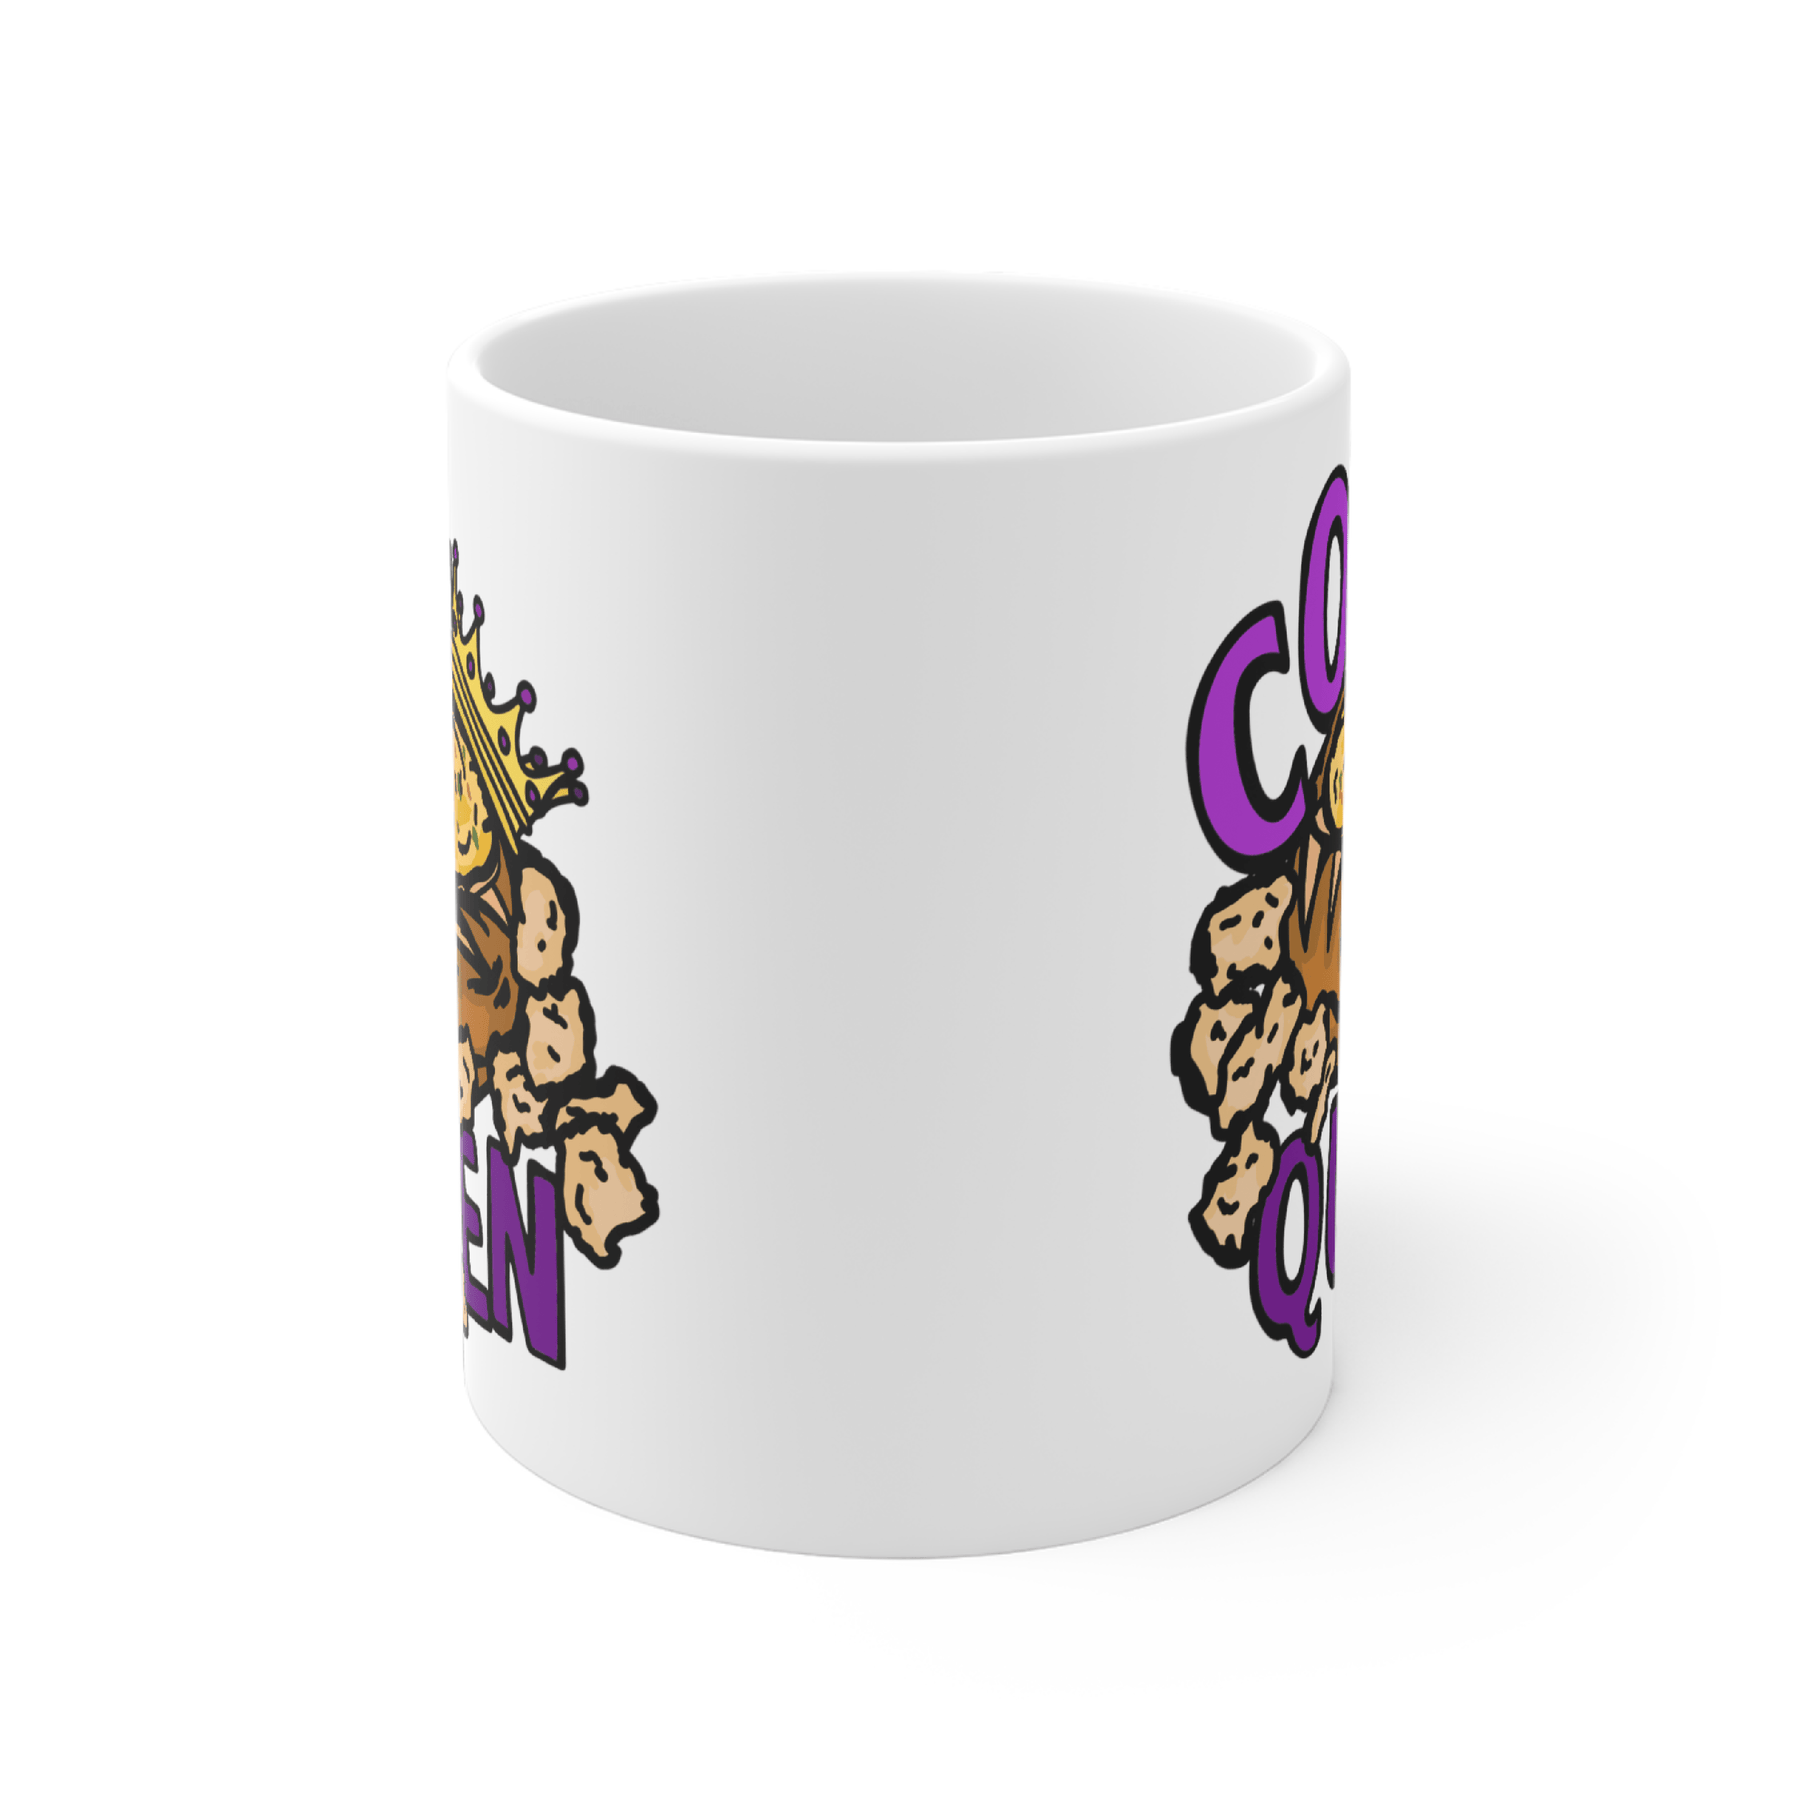 Cob Queen 👑🍞 – Coffee Mug